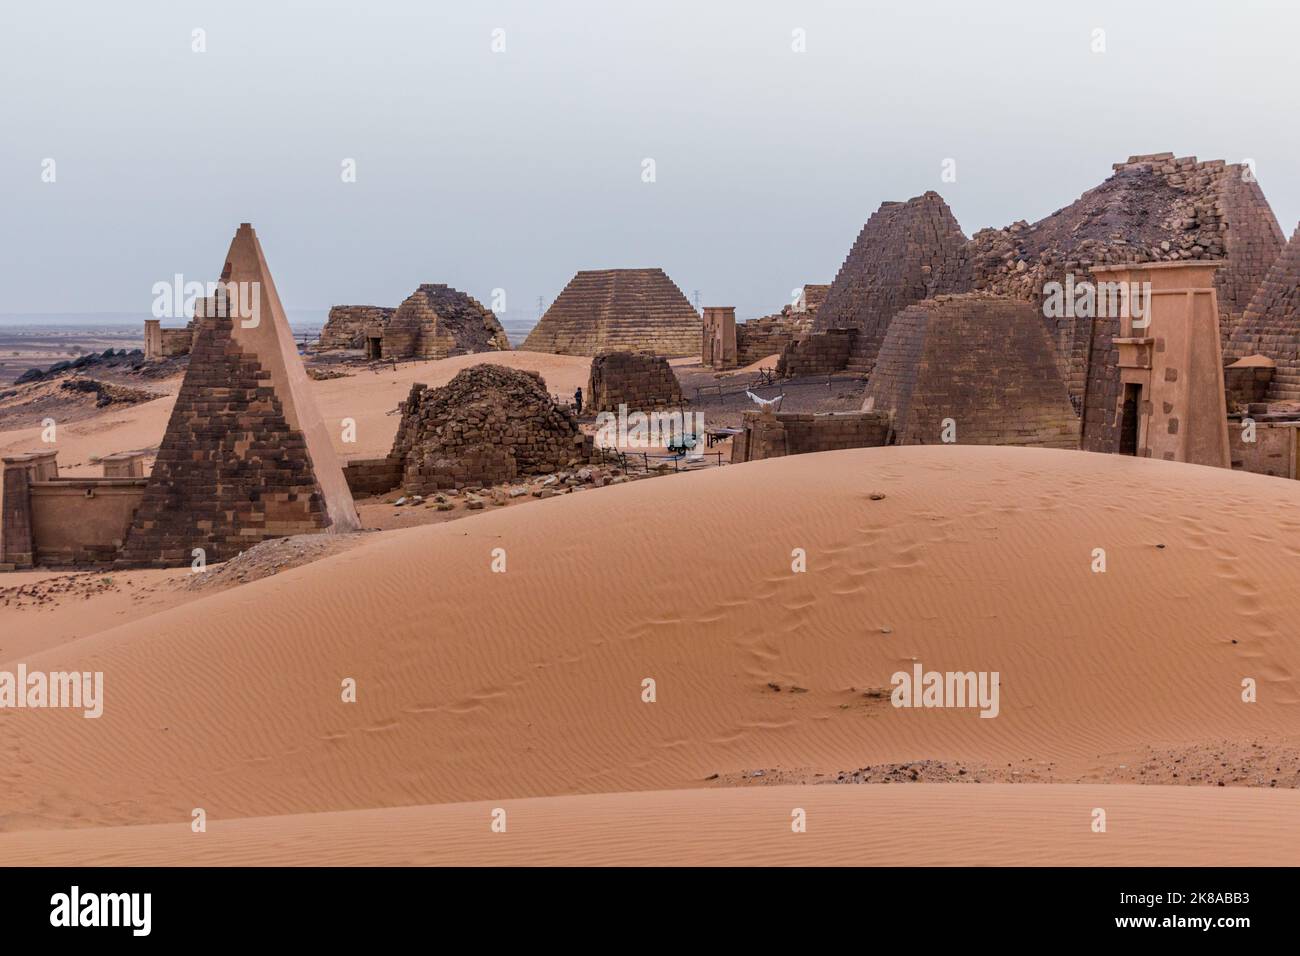 Evening view of Meroe pyramids in Sudan Stock Photo